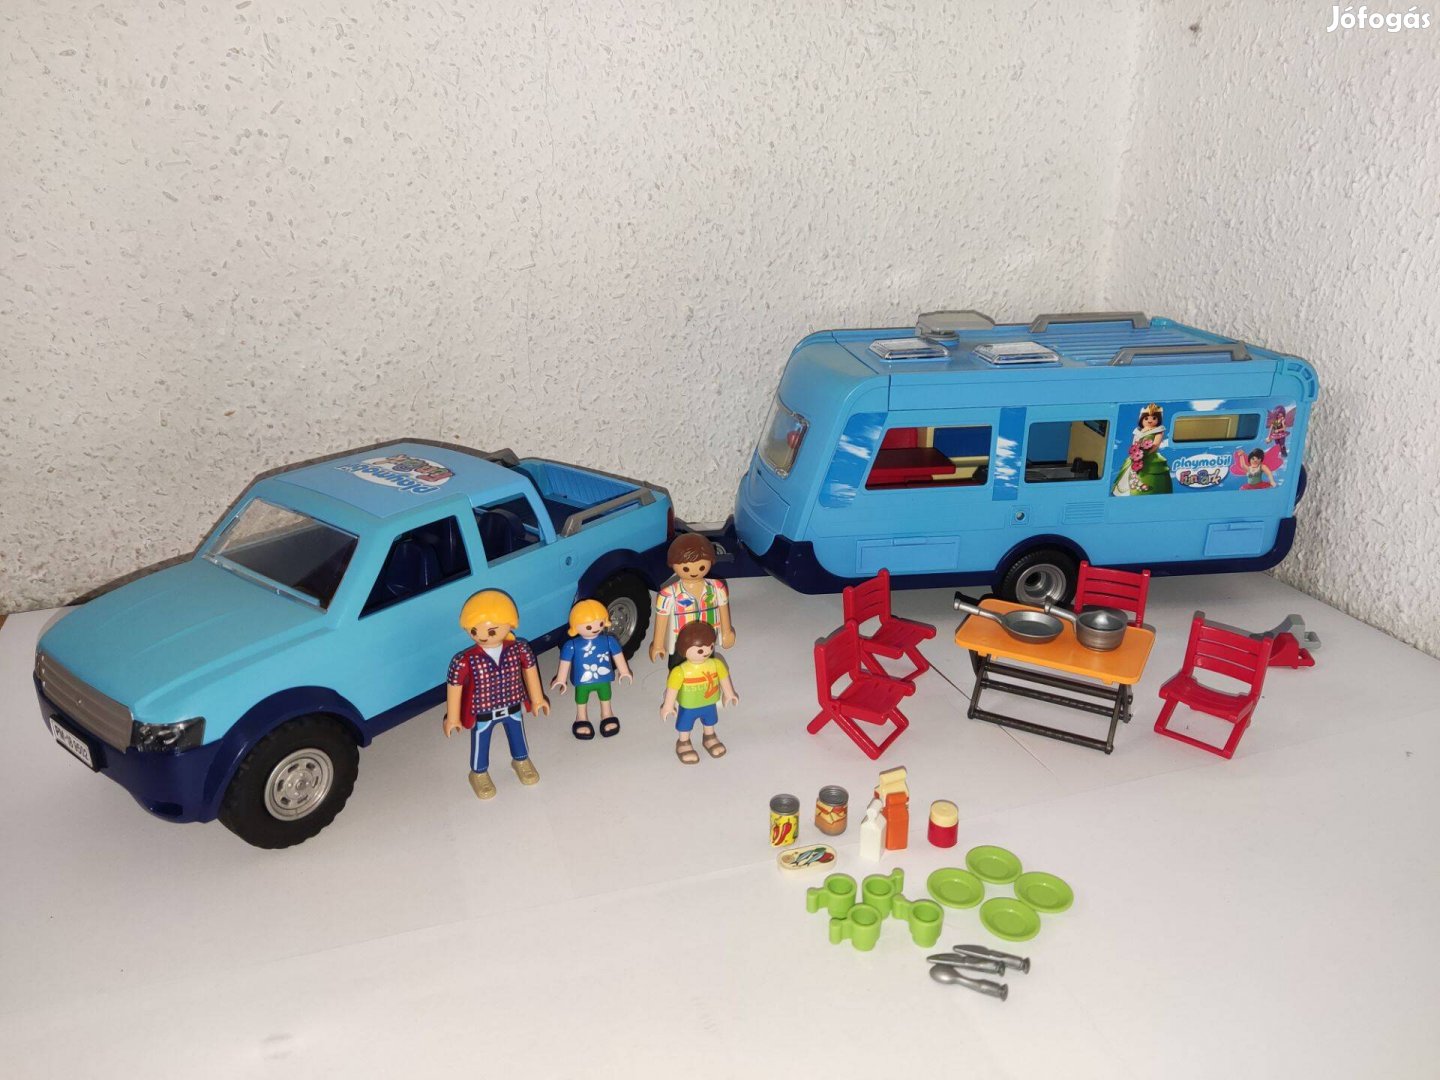 Playmobil Family Fun 9502 Pick-up lakókocsival